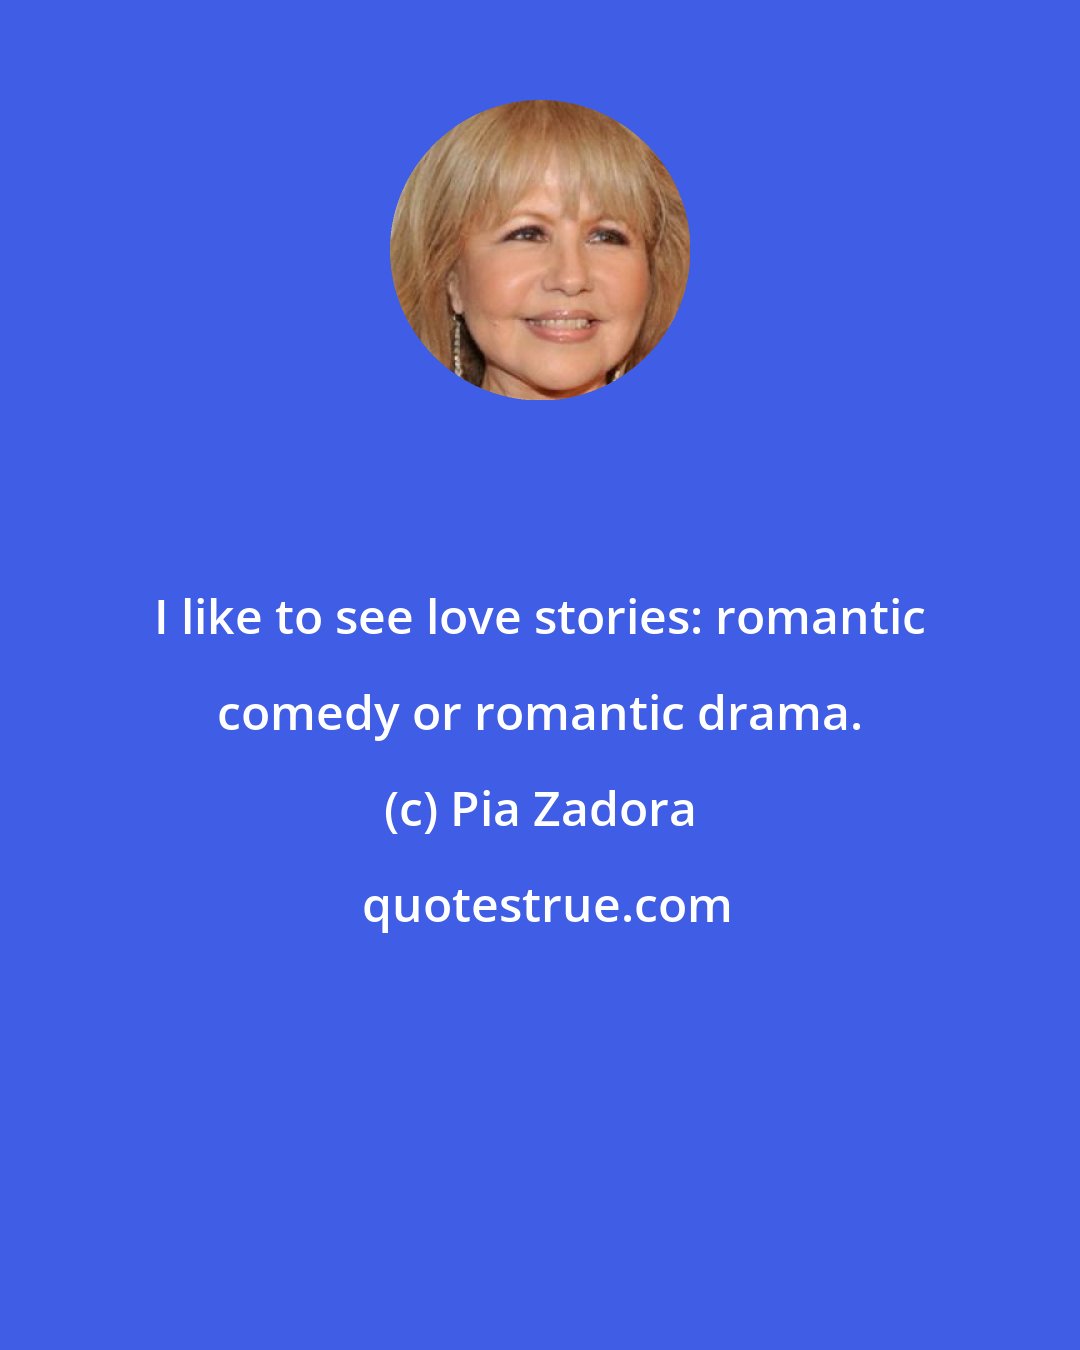 Pia Zadora: I like to see love stories: romantic comedy or romantic drama.